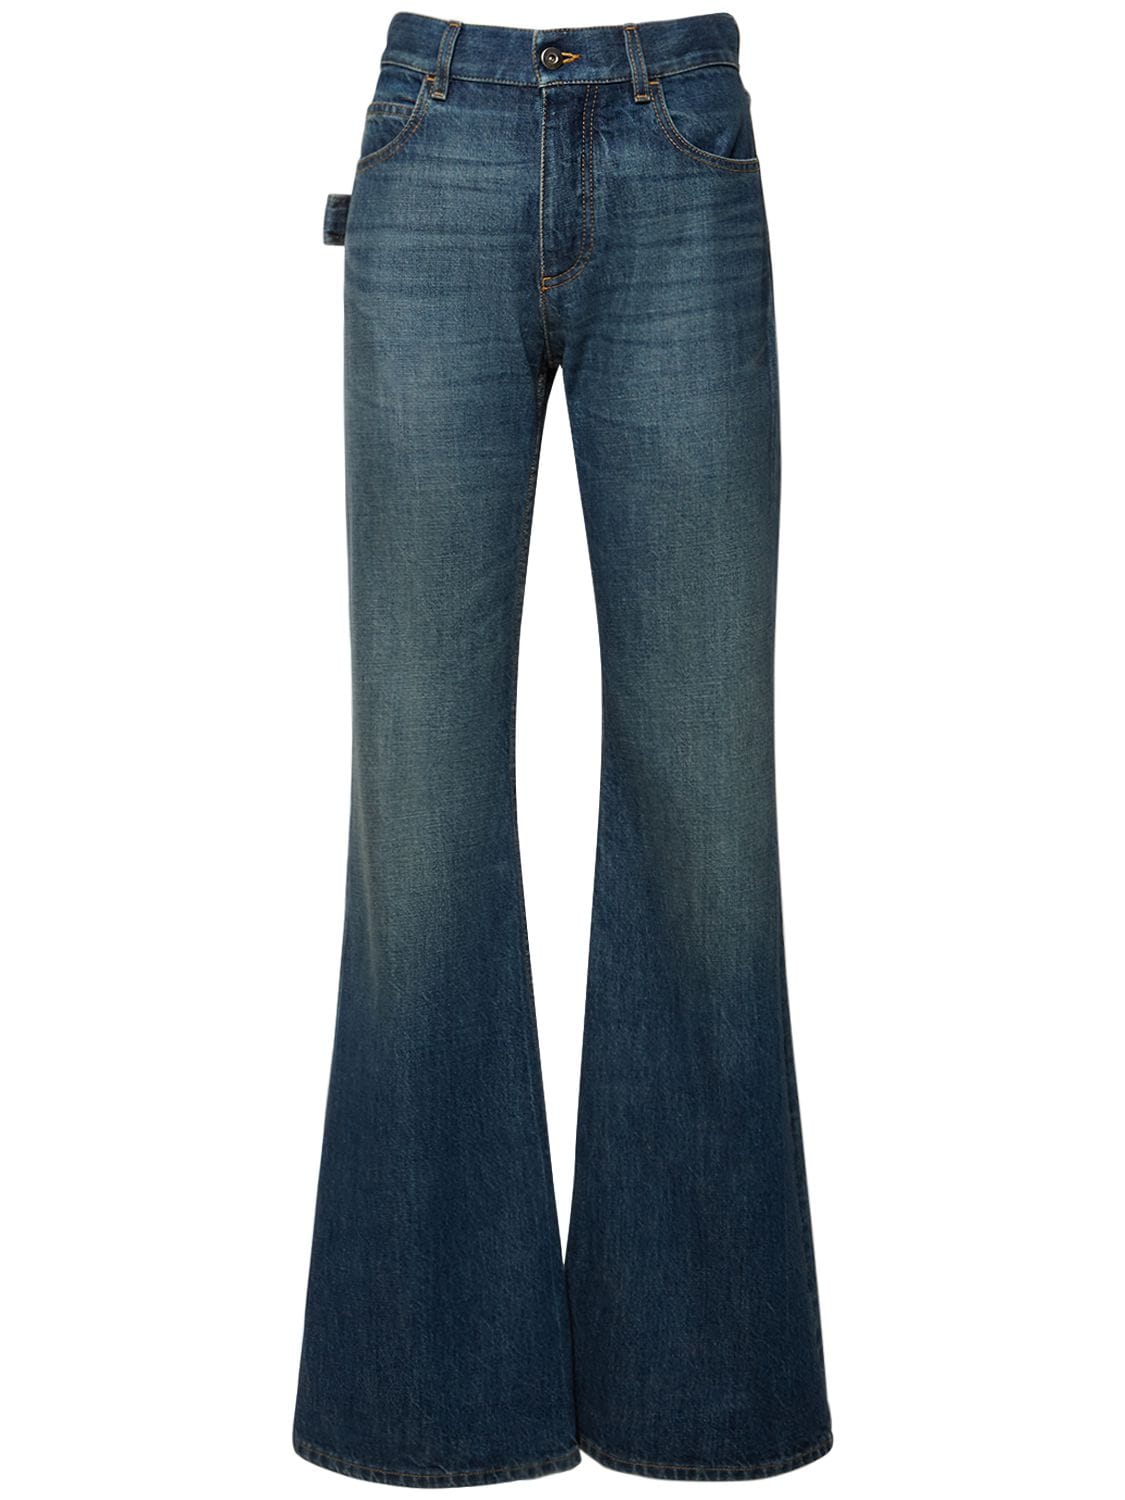 Mujer Jeans Acampanados De Denim 34 - BOTTEGA VENETA - Modalova